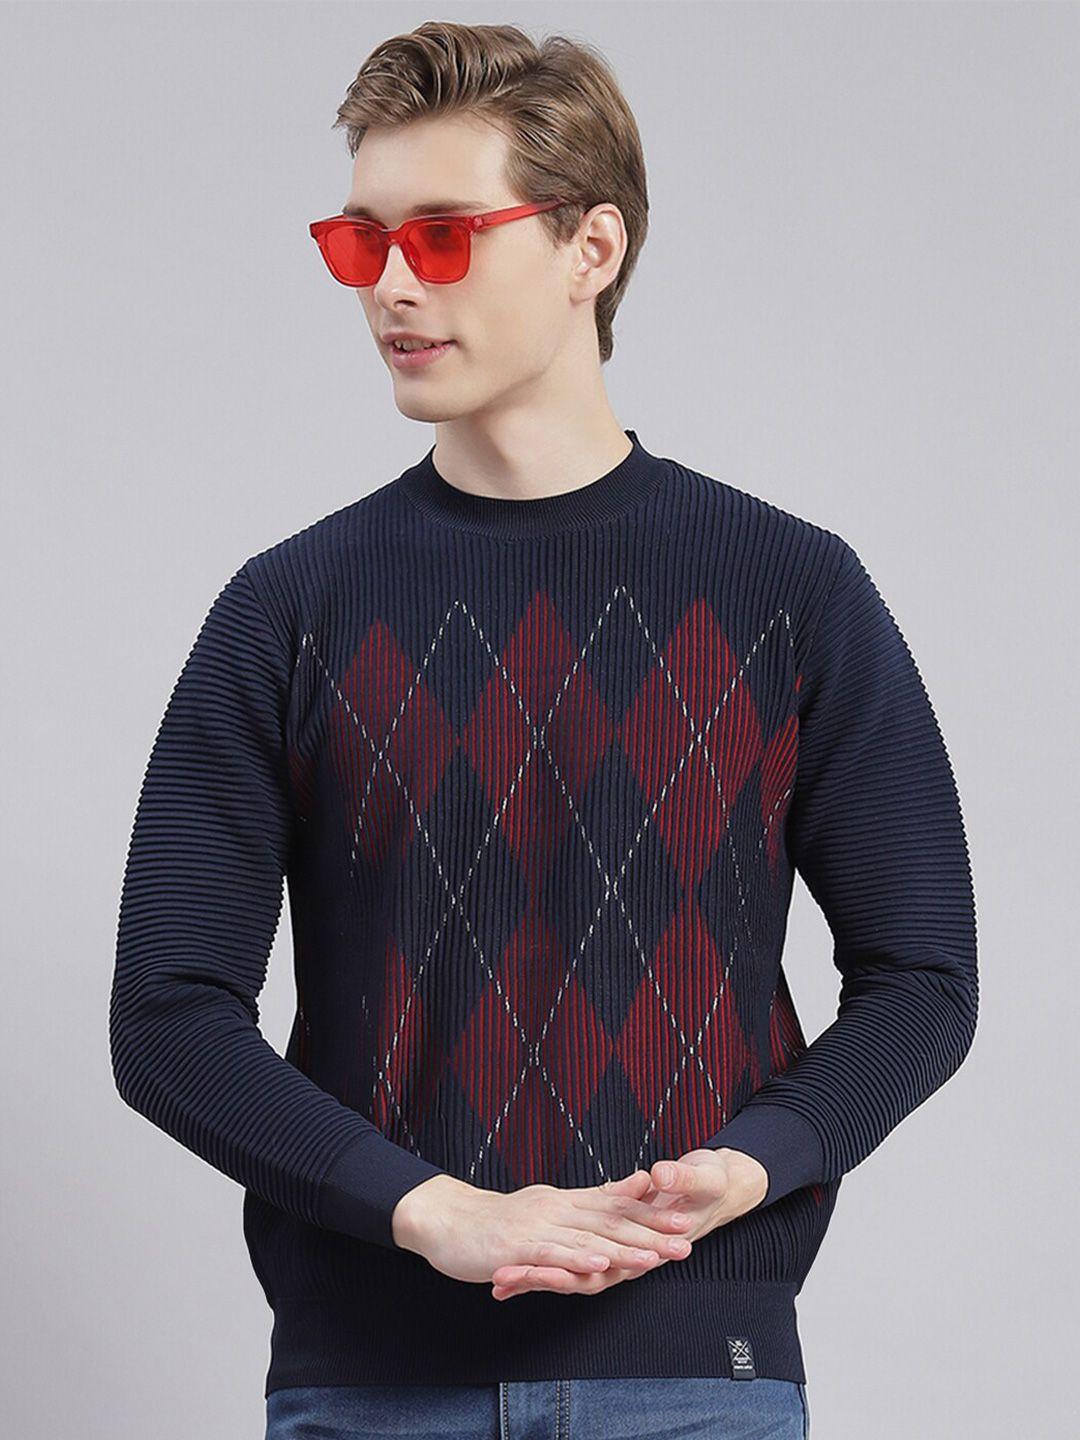 monte carlo self design woollen pullover